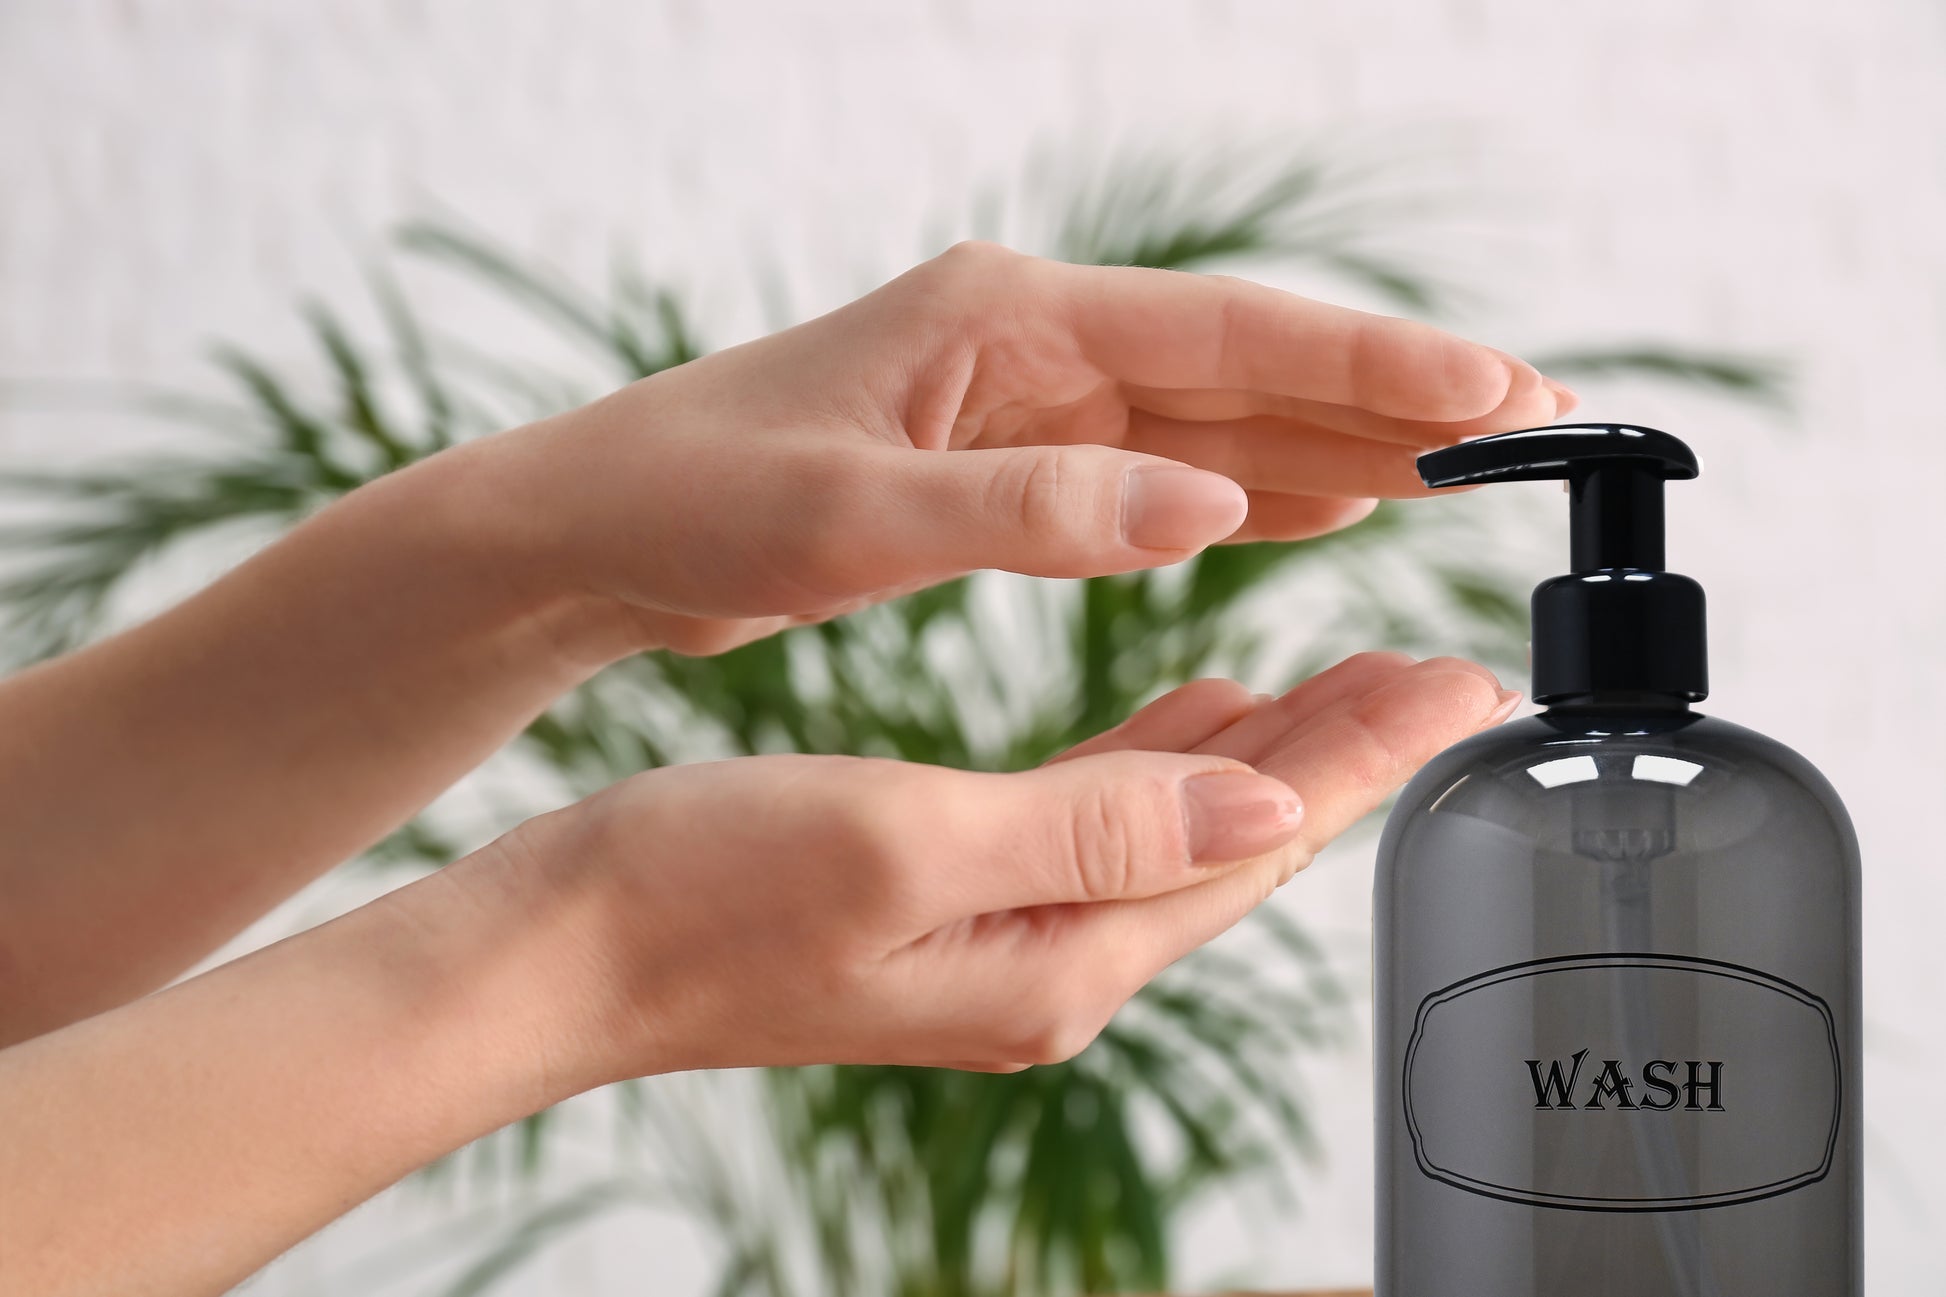 Black Plastic Soap Bottle Shampoo Dispenser Refillable Shower Bottles  Bathroom Hand Soap Conditioner Bottle Reusable Body Wash 